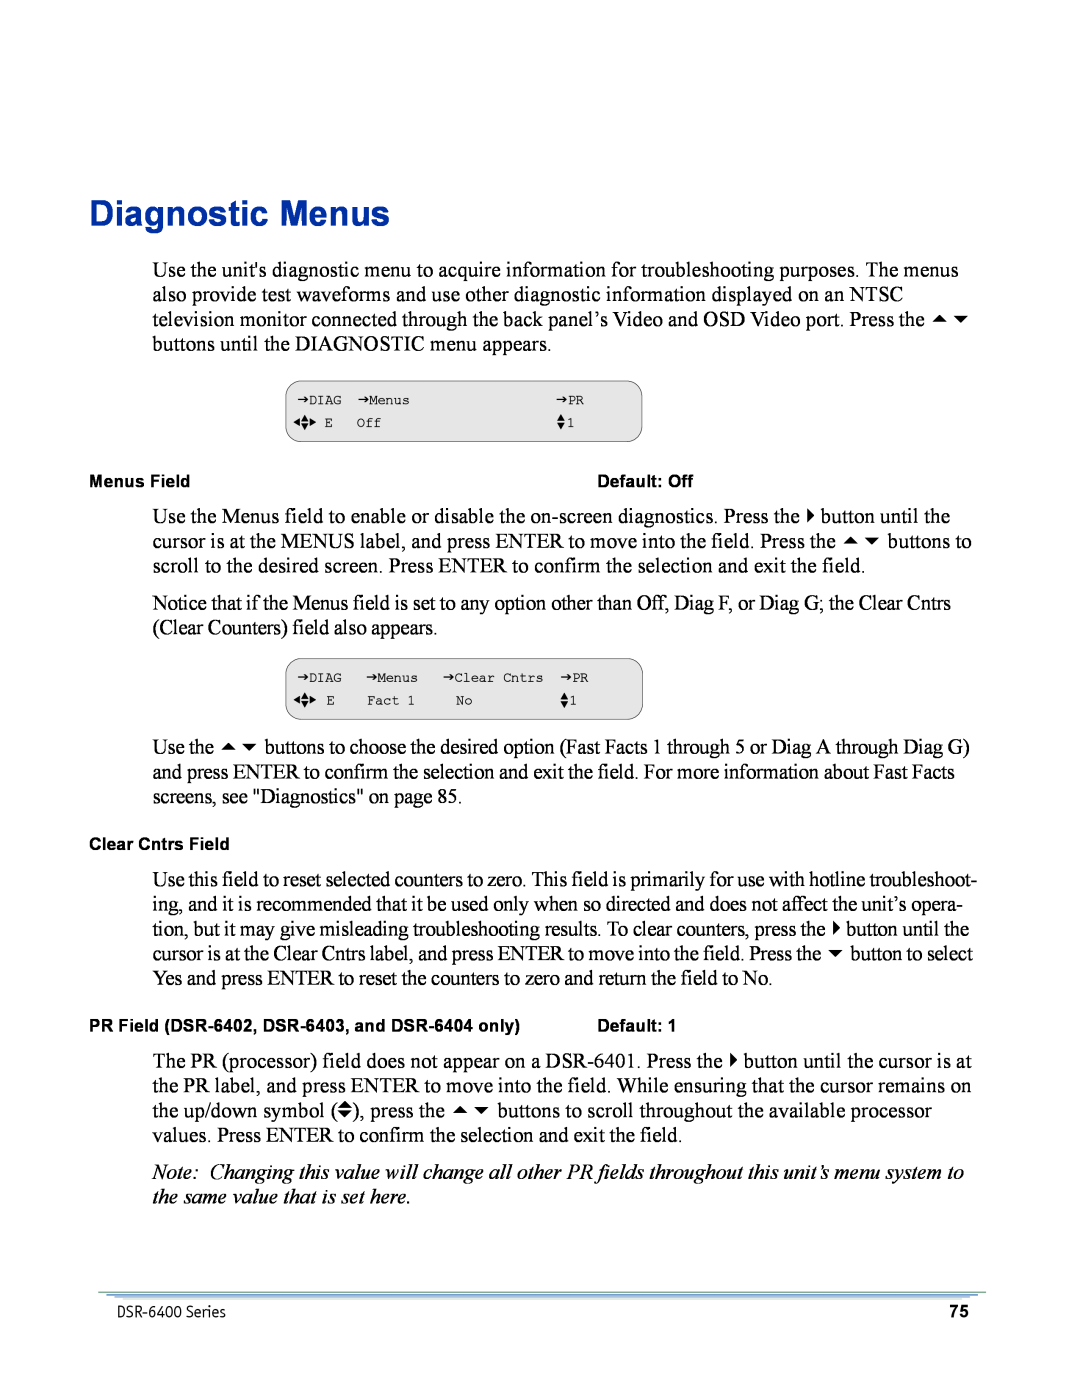 Motorola DSR-6400 manual Diagnostic Menus, Menus Field, Default Off, Clear Cntrs Field 